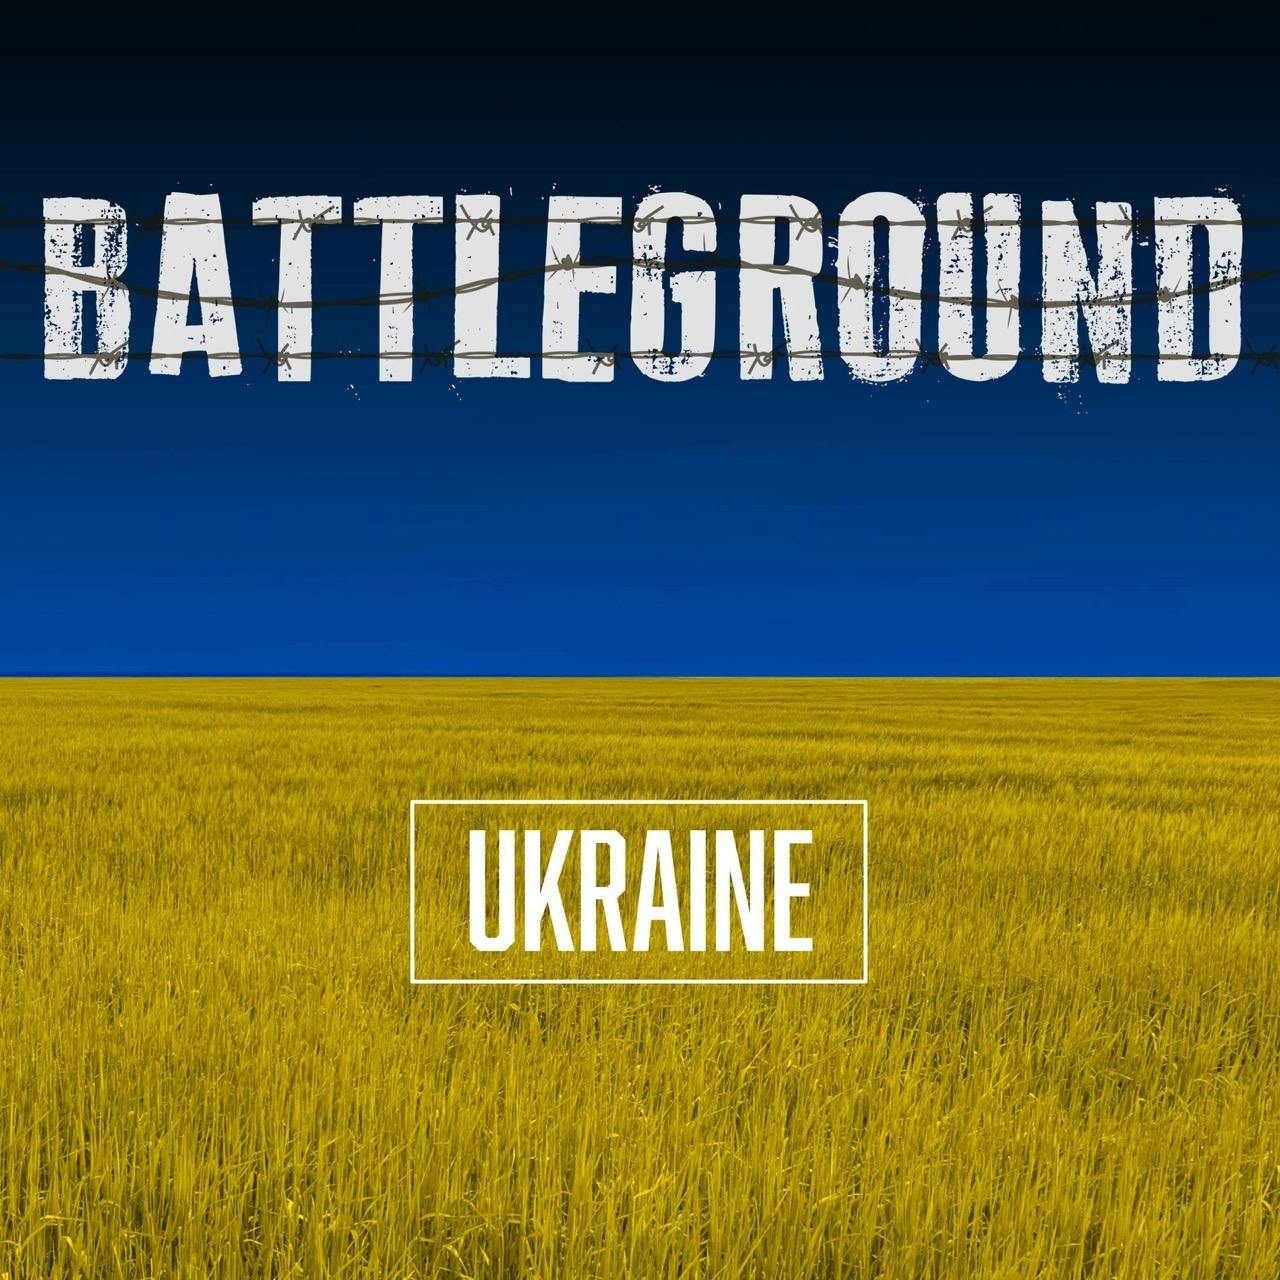 73. Ramping up Ukraine’s counteroffensive